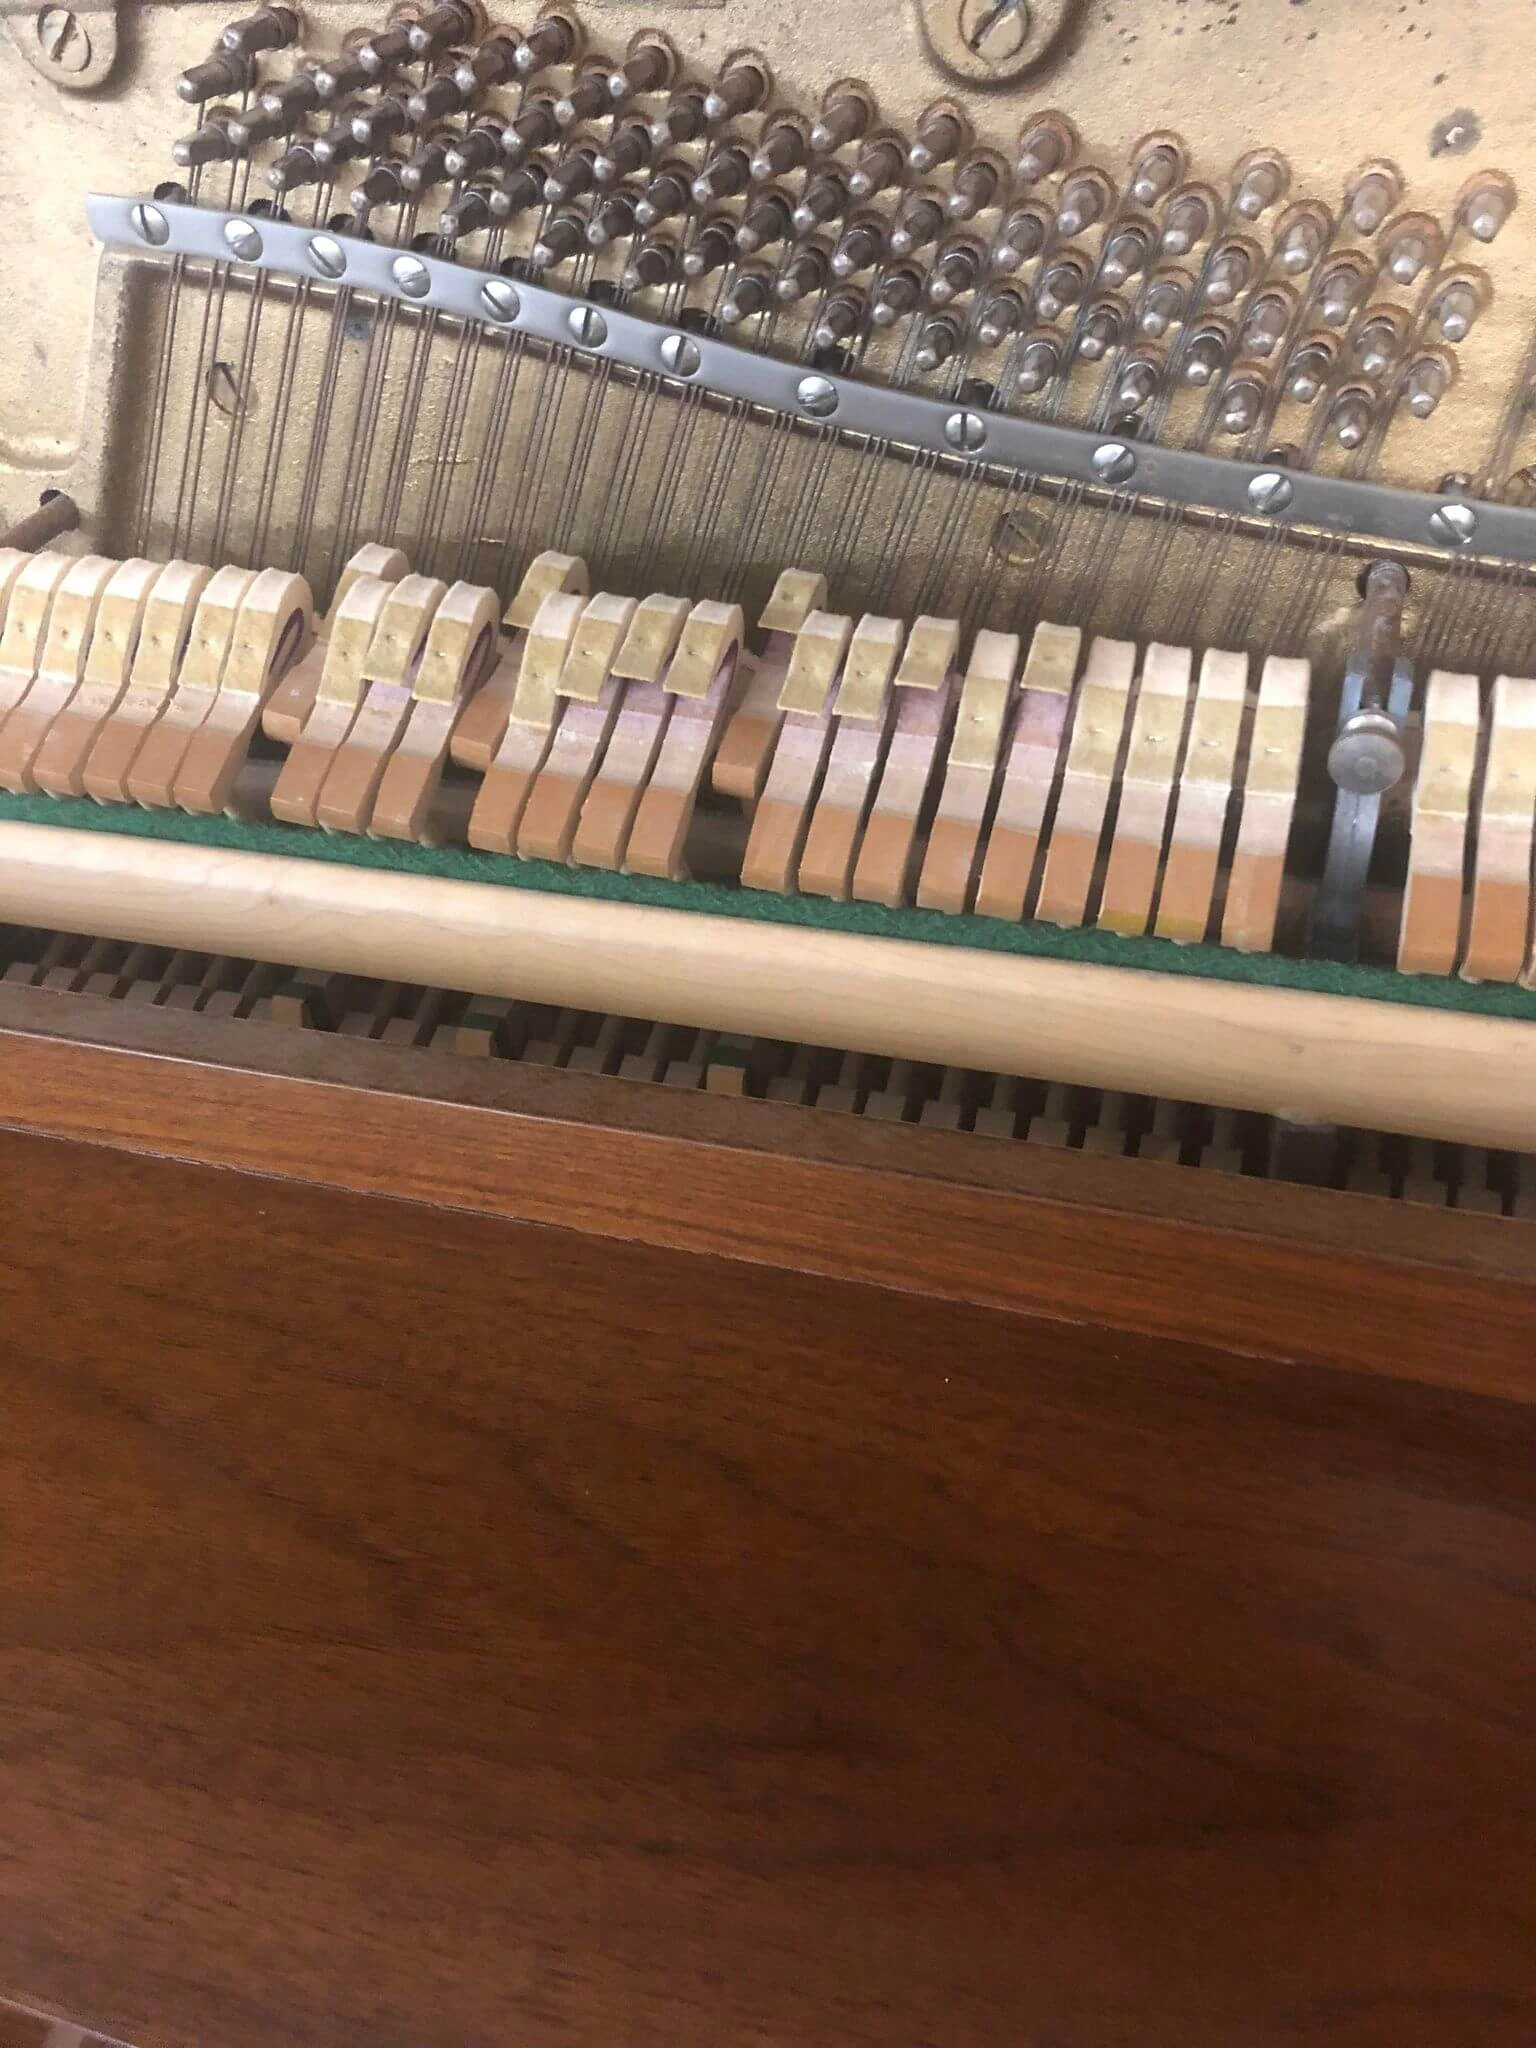 Water damaged piano in need of major repair work